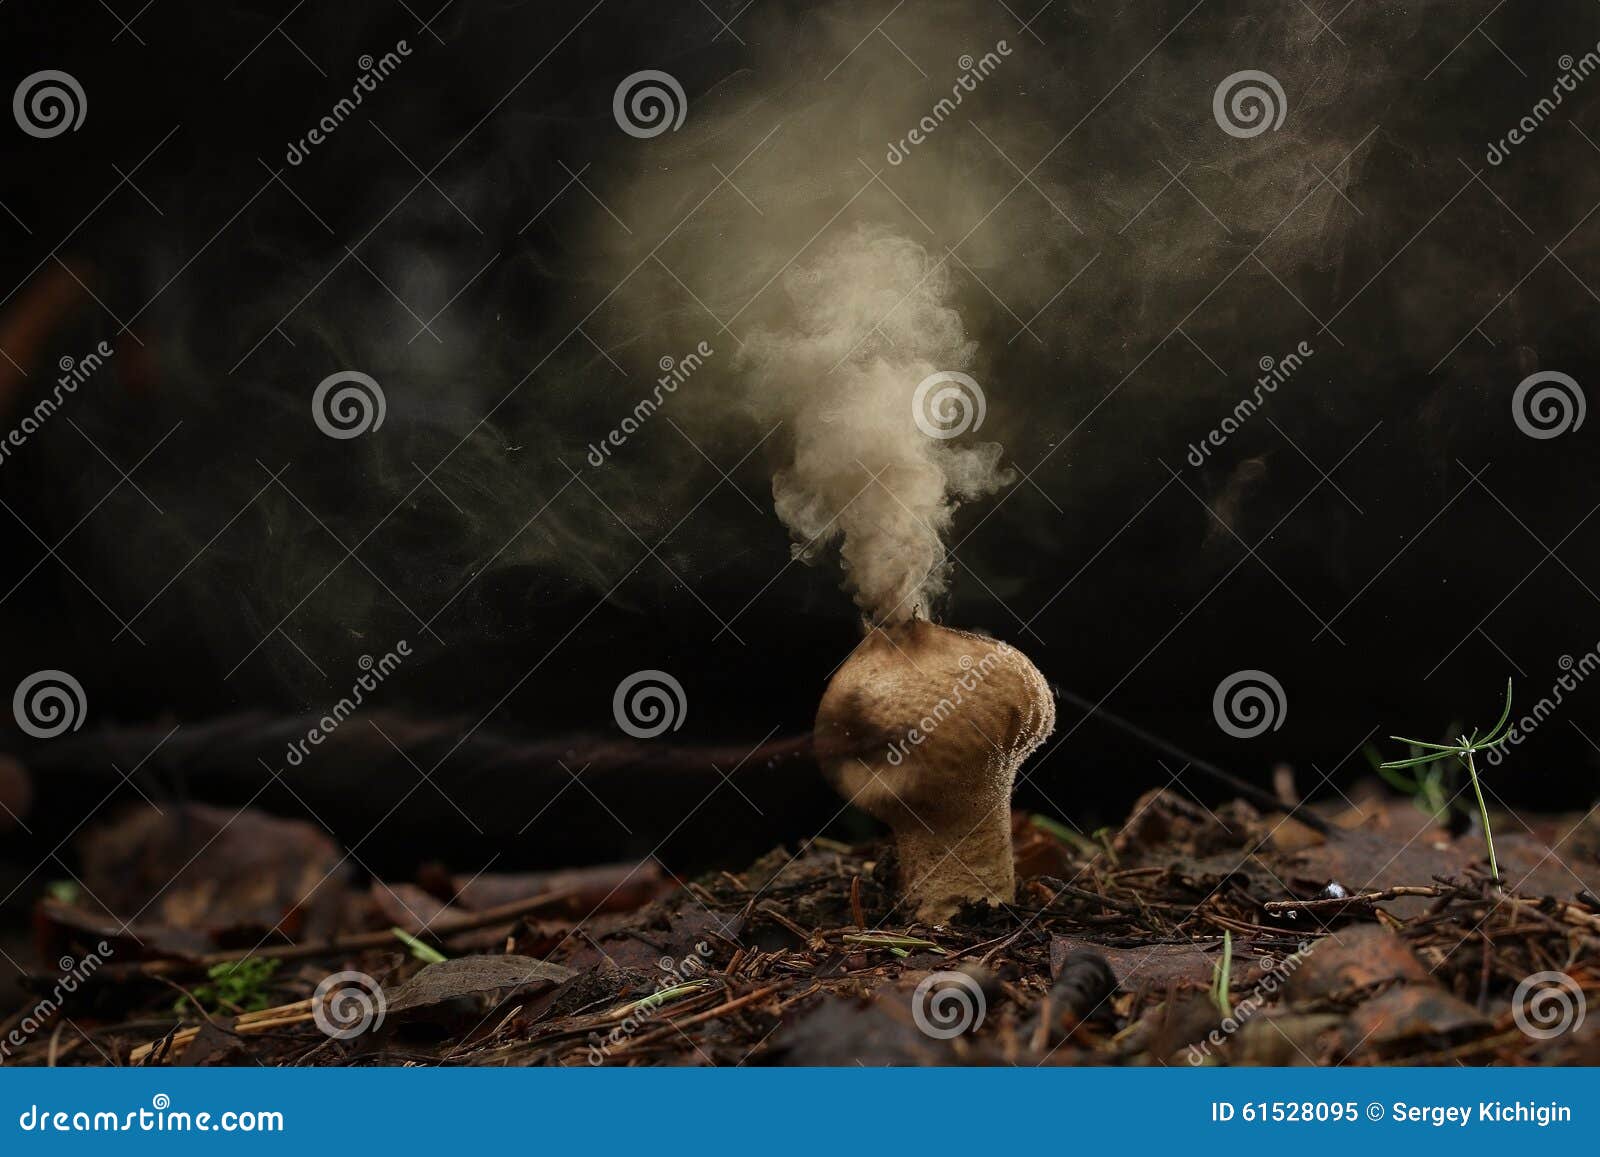 puffball fungus spores